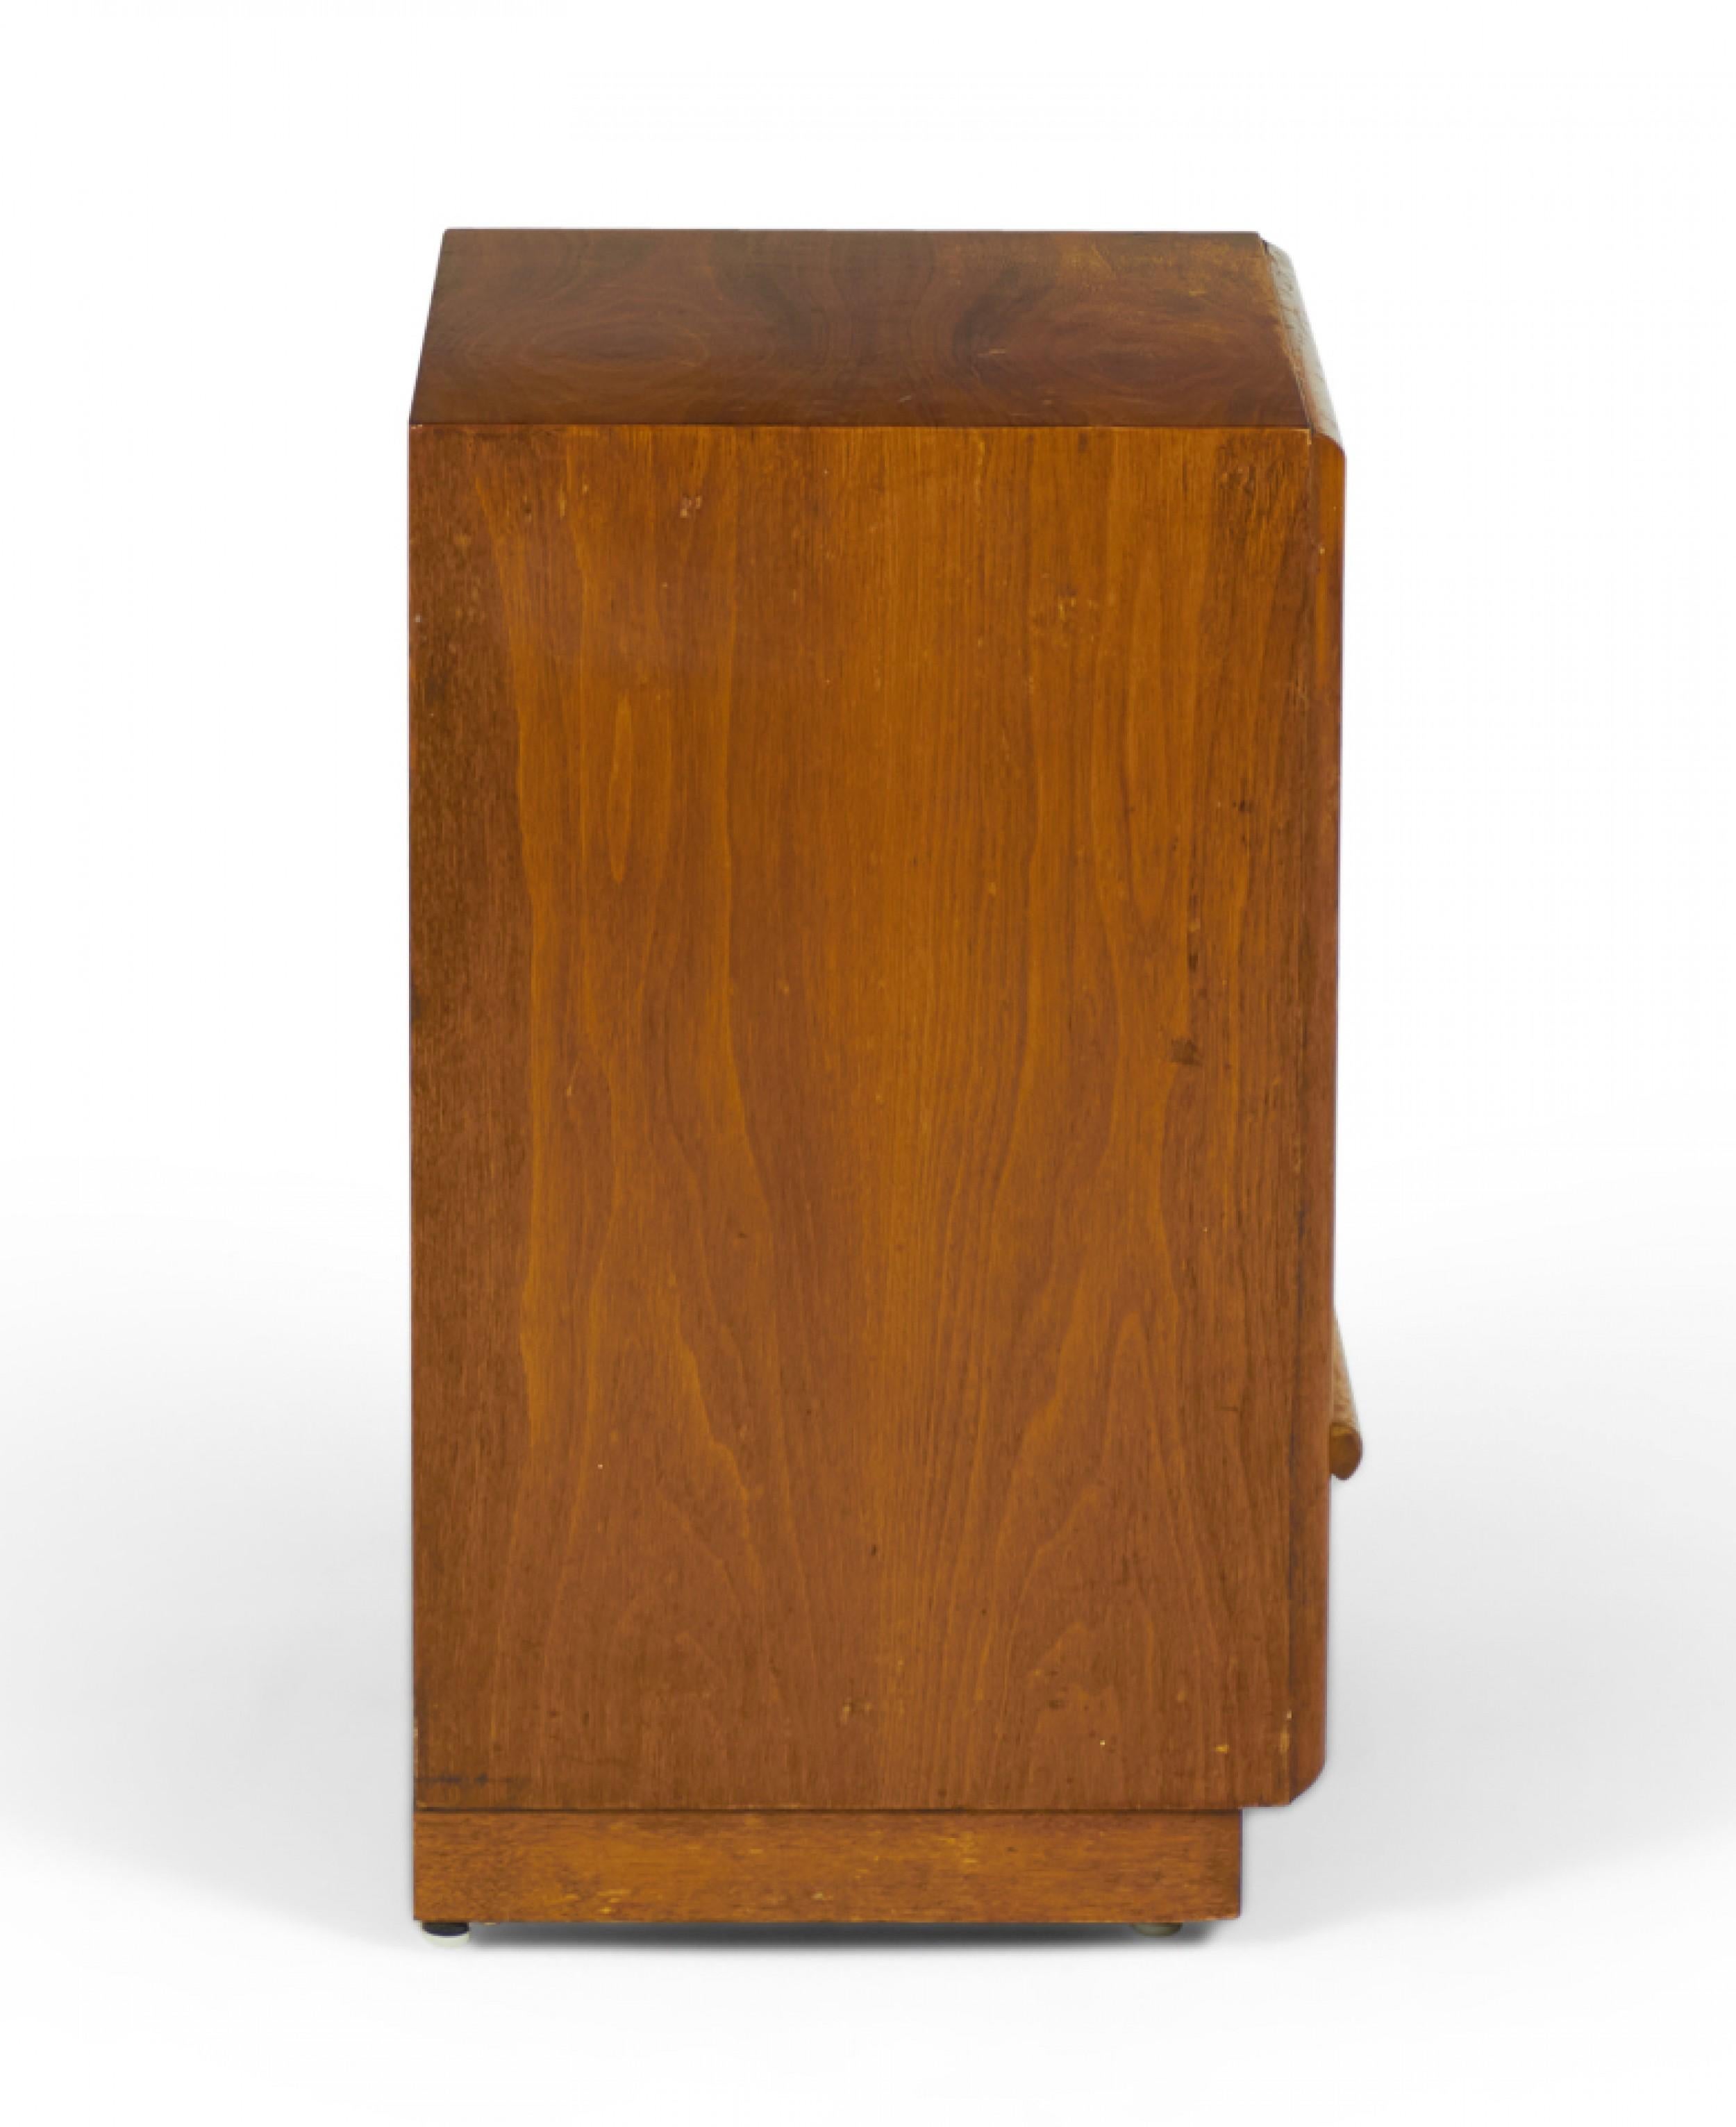 Wood T.H. Robsjohn-Gibbings for Widdicomb Walnut Lower Drawer Nightstand  / Cabinet For Sale